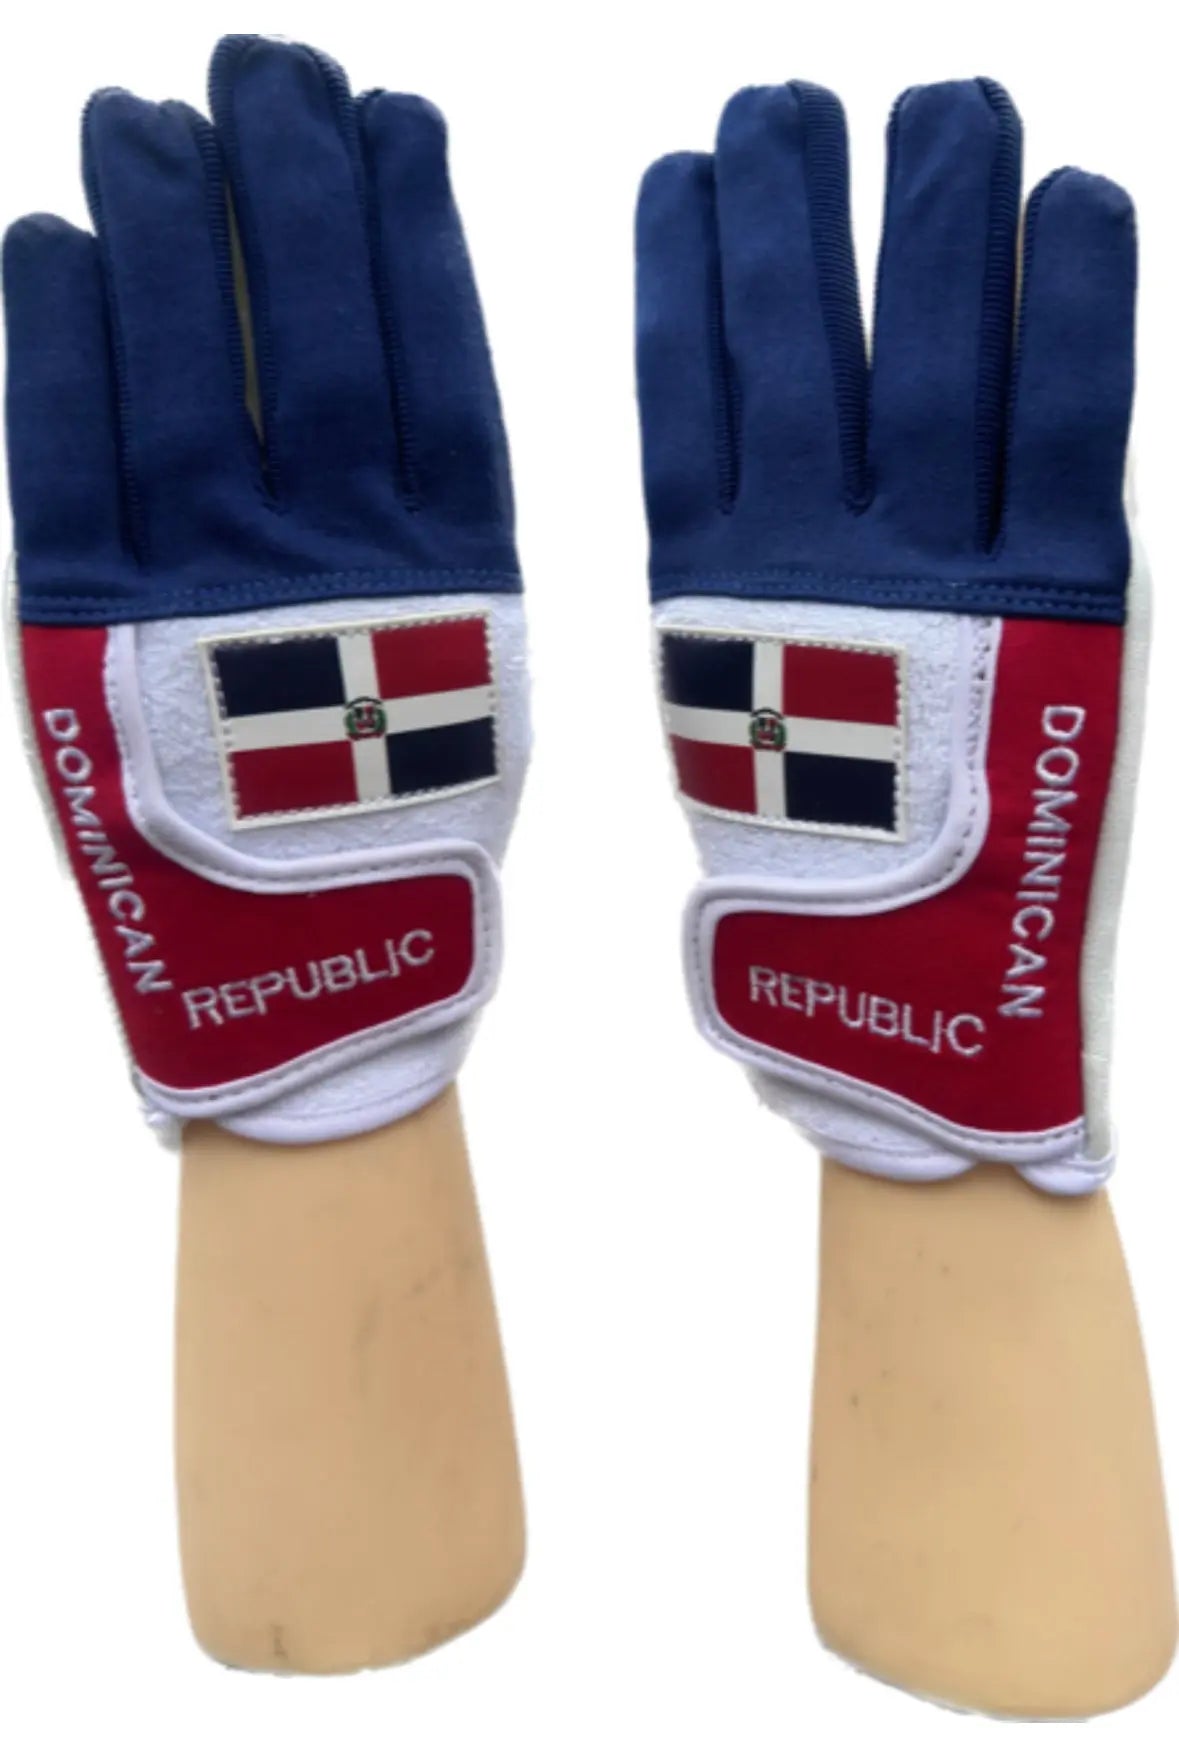 KOTC Pro Dominican Republic Gloves Unpadded Palms